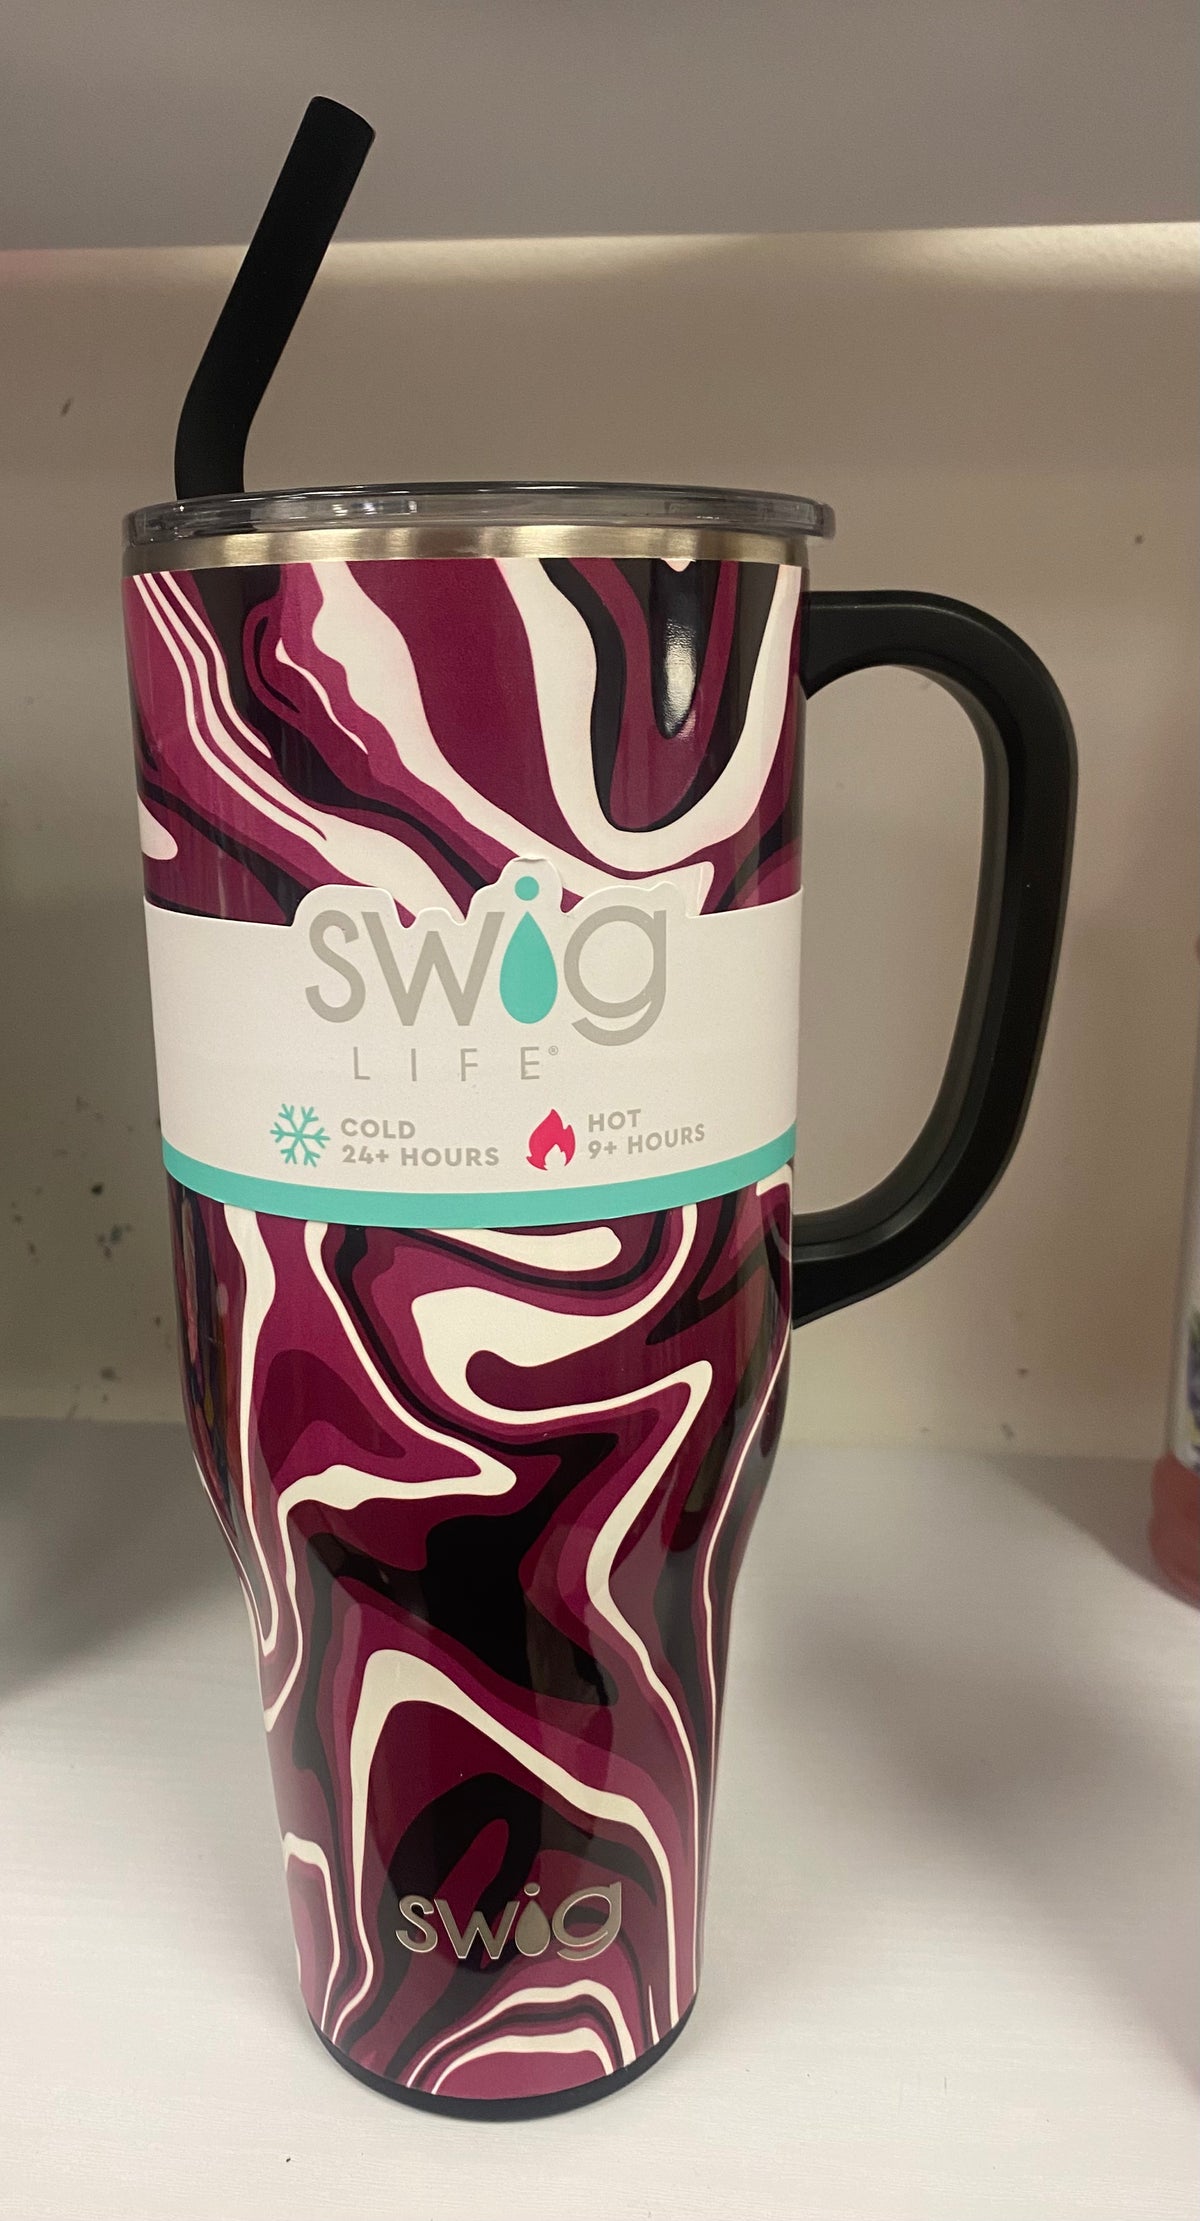 Swig Confetti 40 oz. Mega Mug